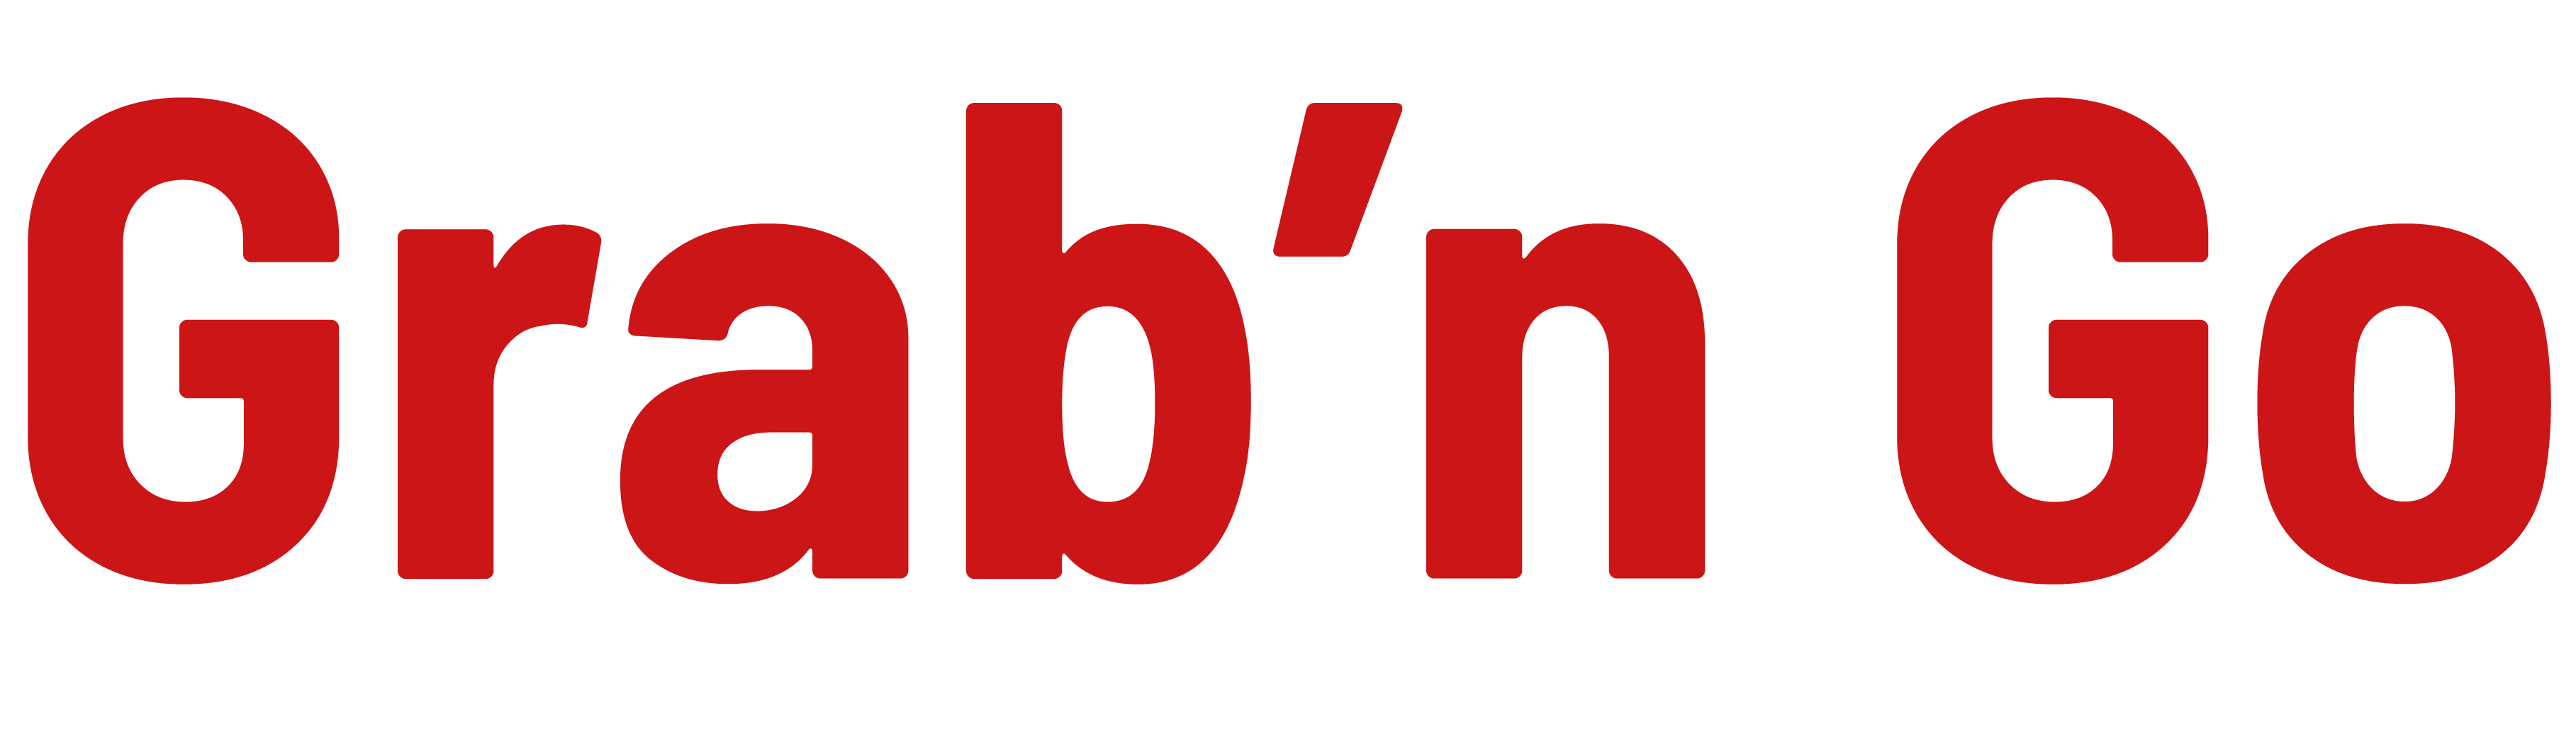 Logo MD